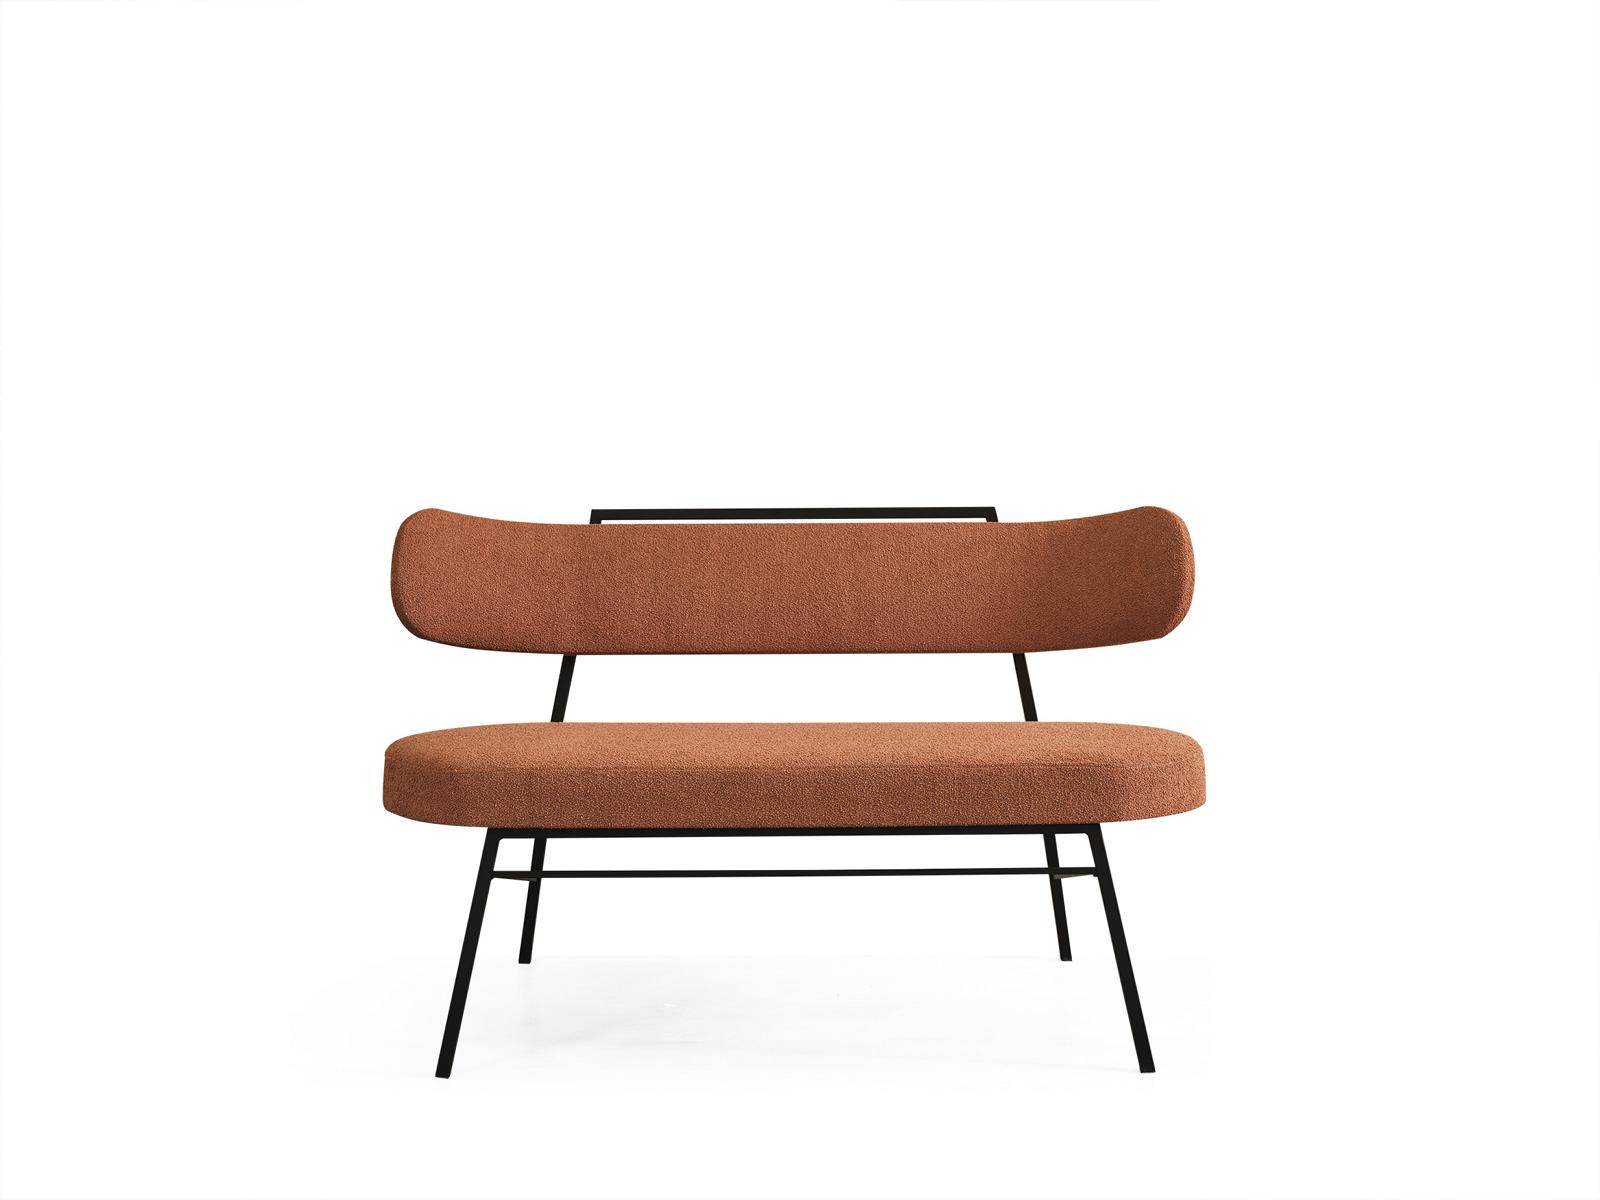 Design Luxury Bench Bench Designer Benches Furniture Design Furnishings